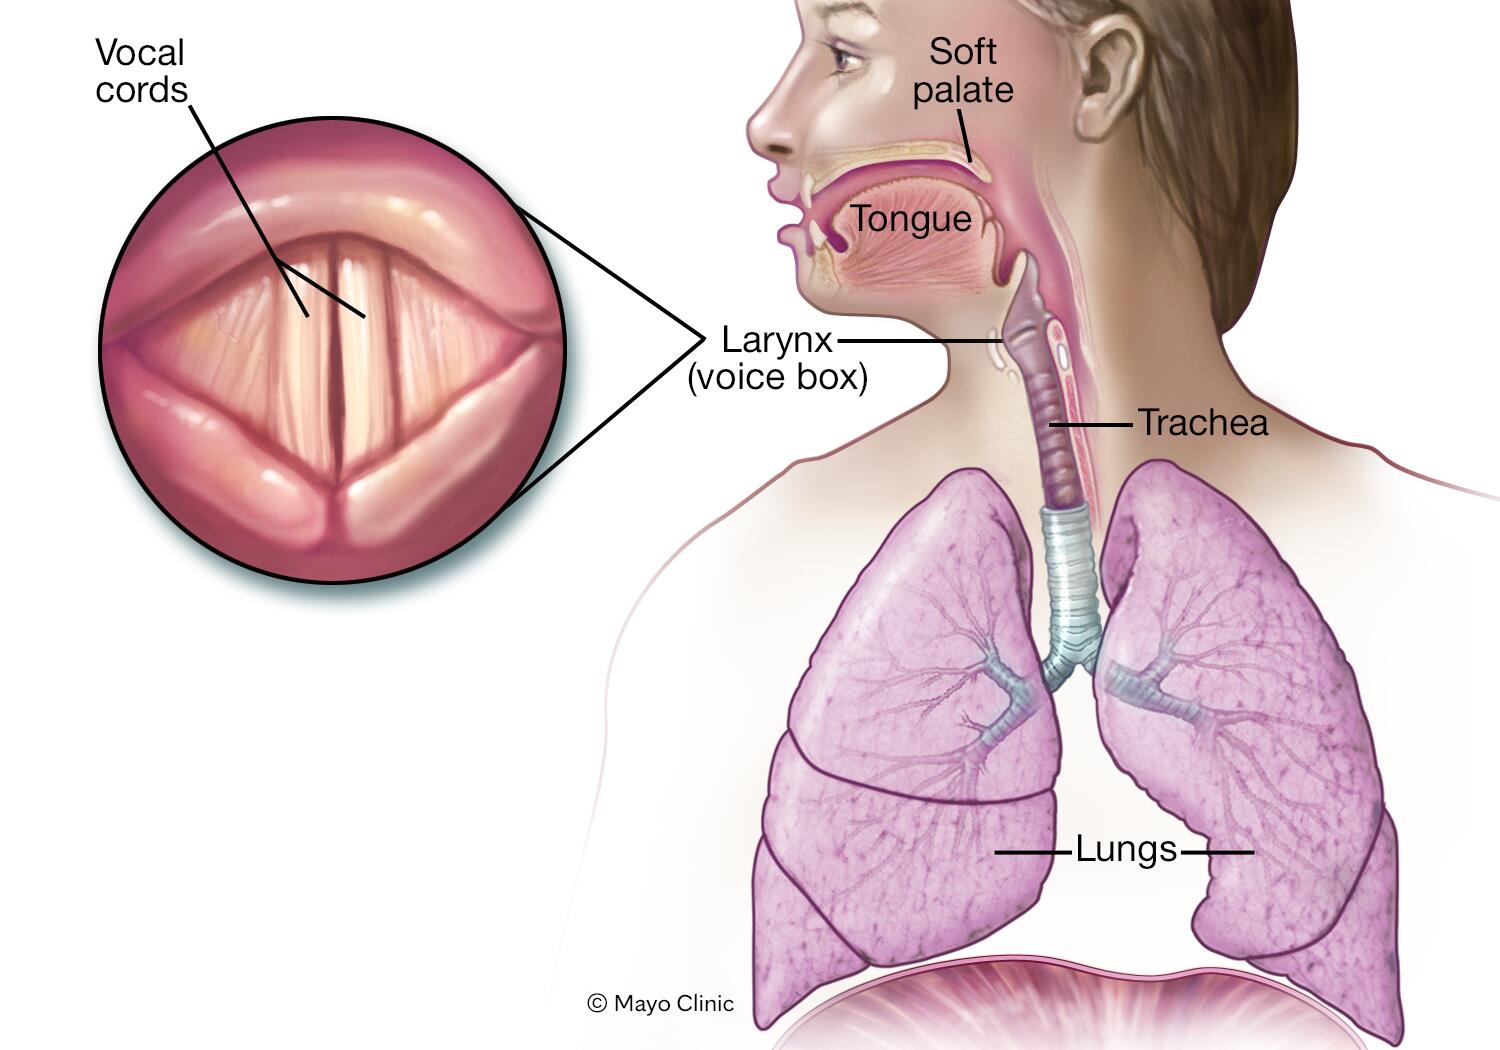 Illustration showing vocal cords